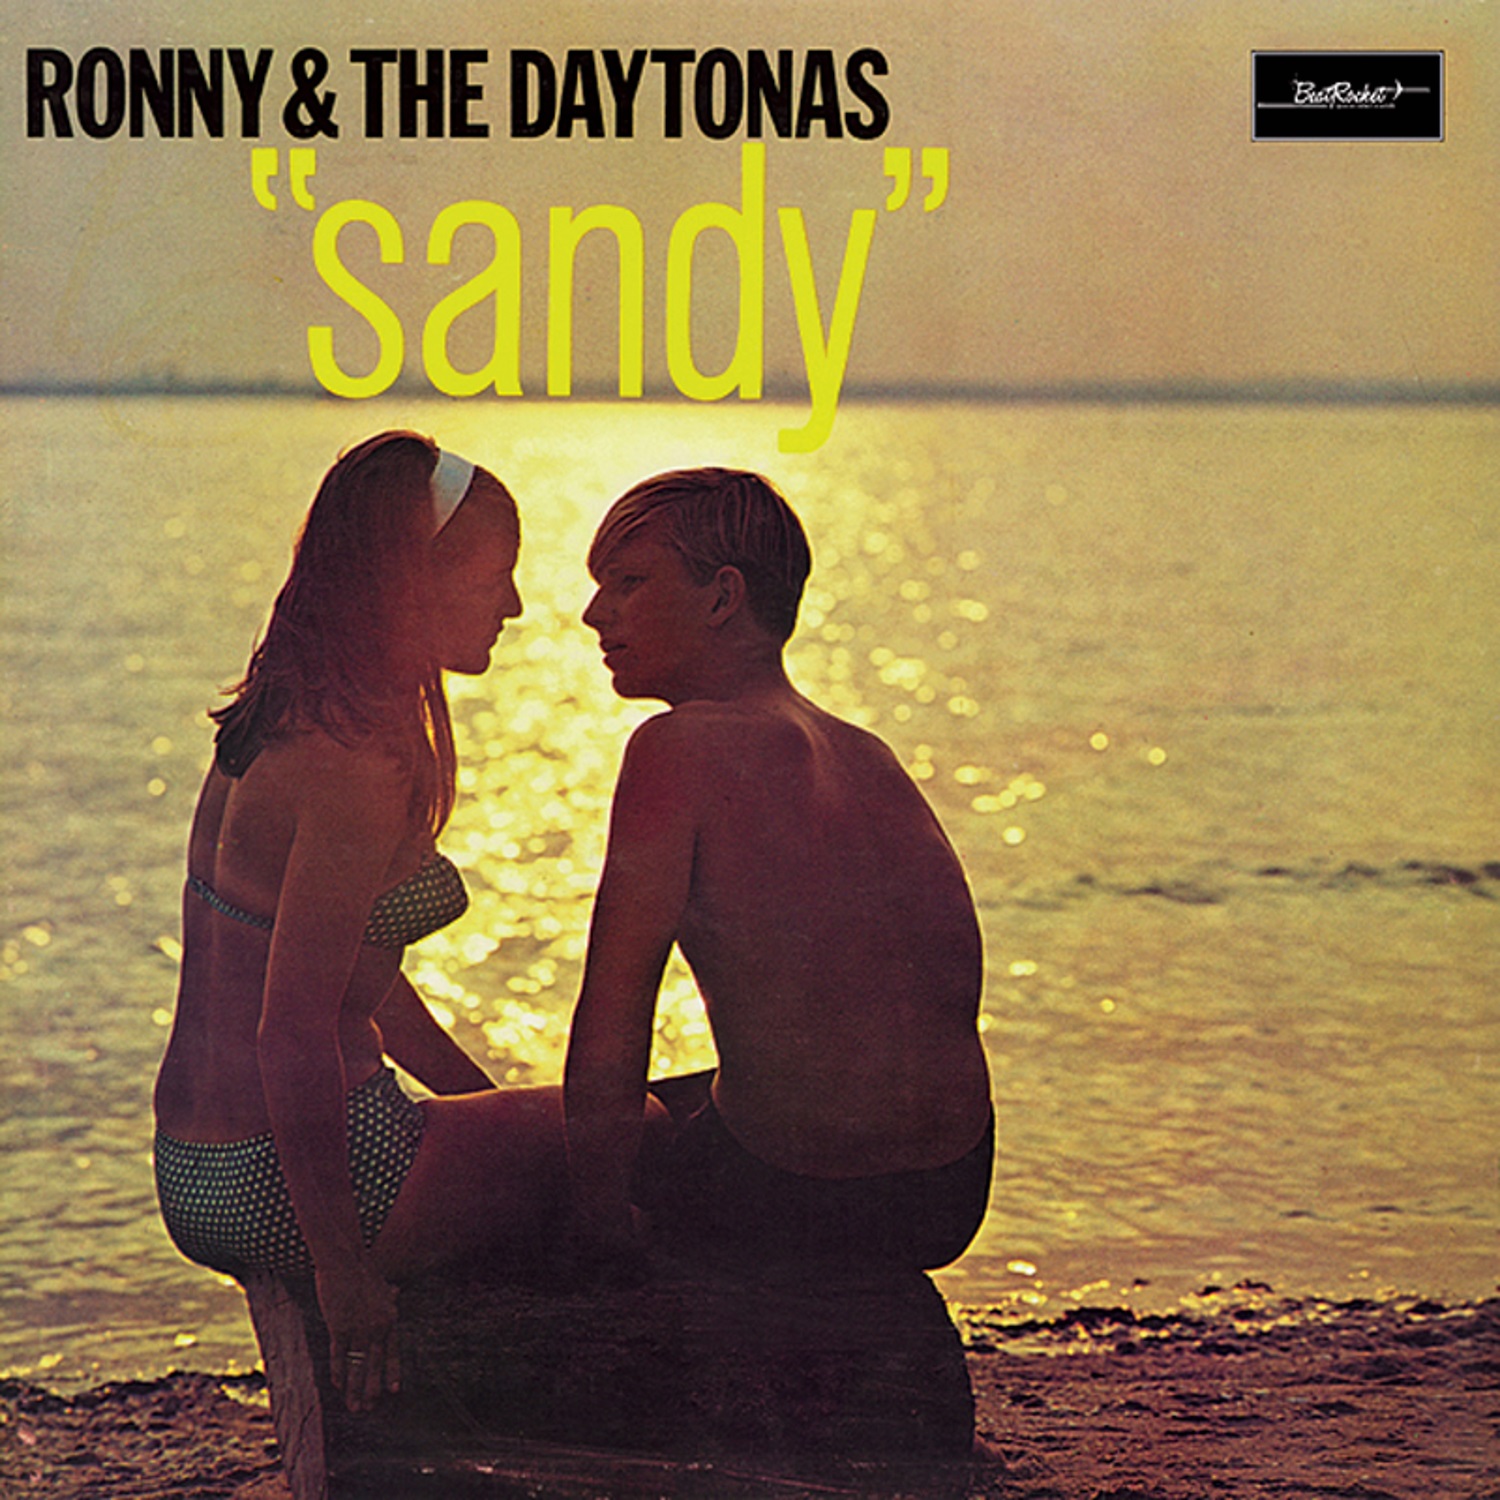 Ronny & the Daytonas - Sandy LP